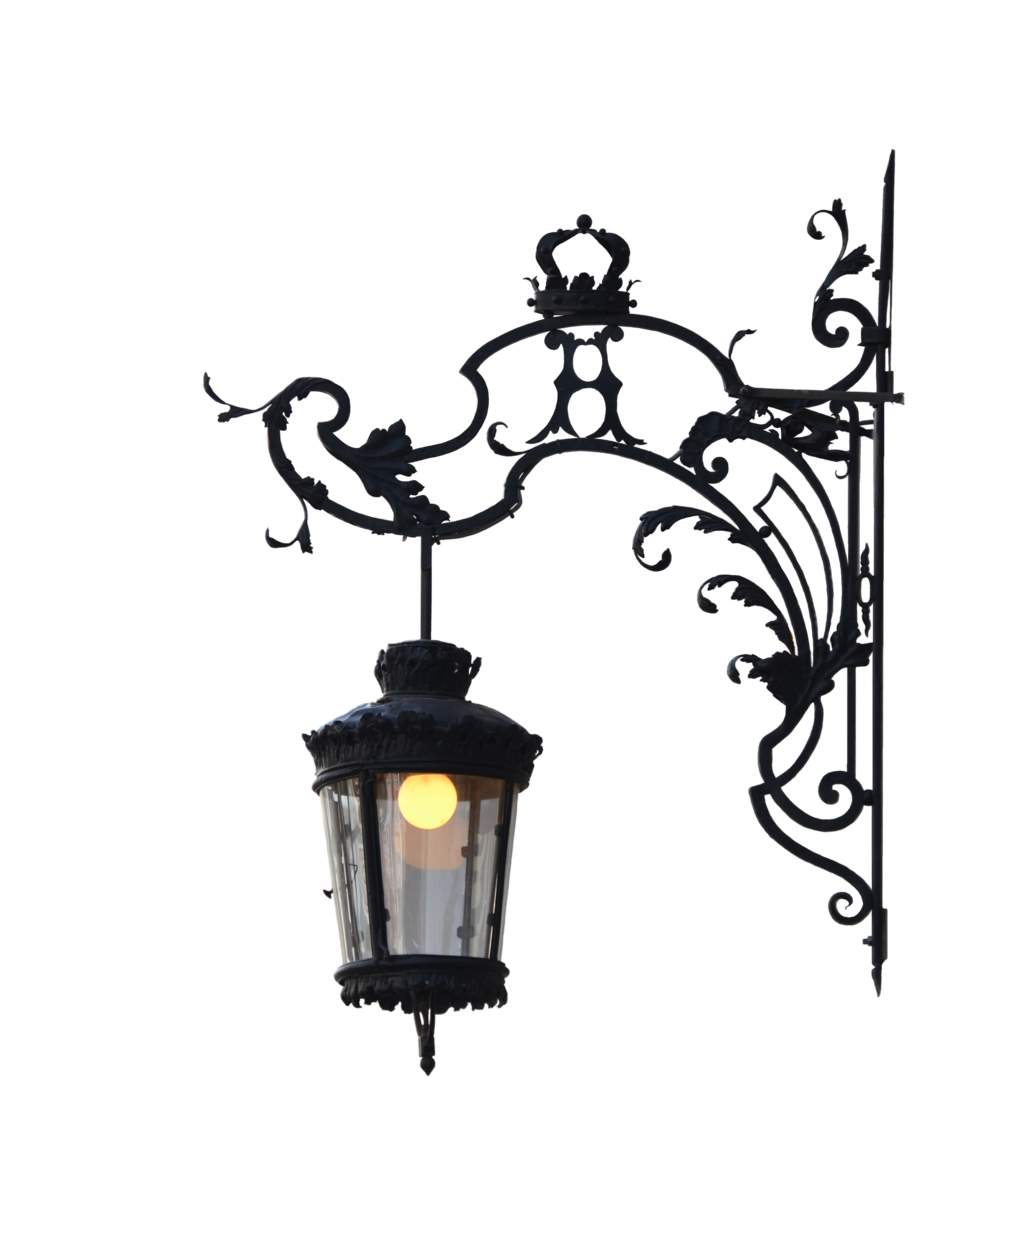 Lámpara de luz decorativa PNG imagen de alta calidad